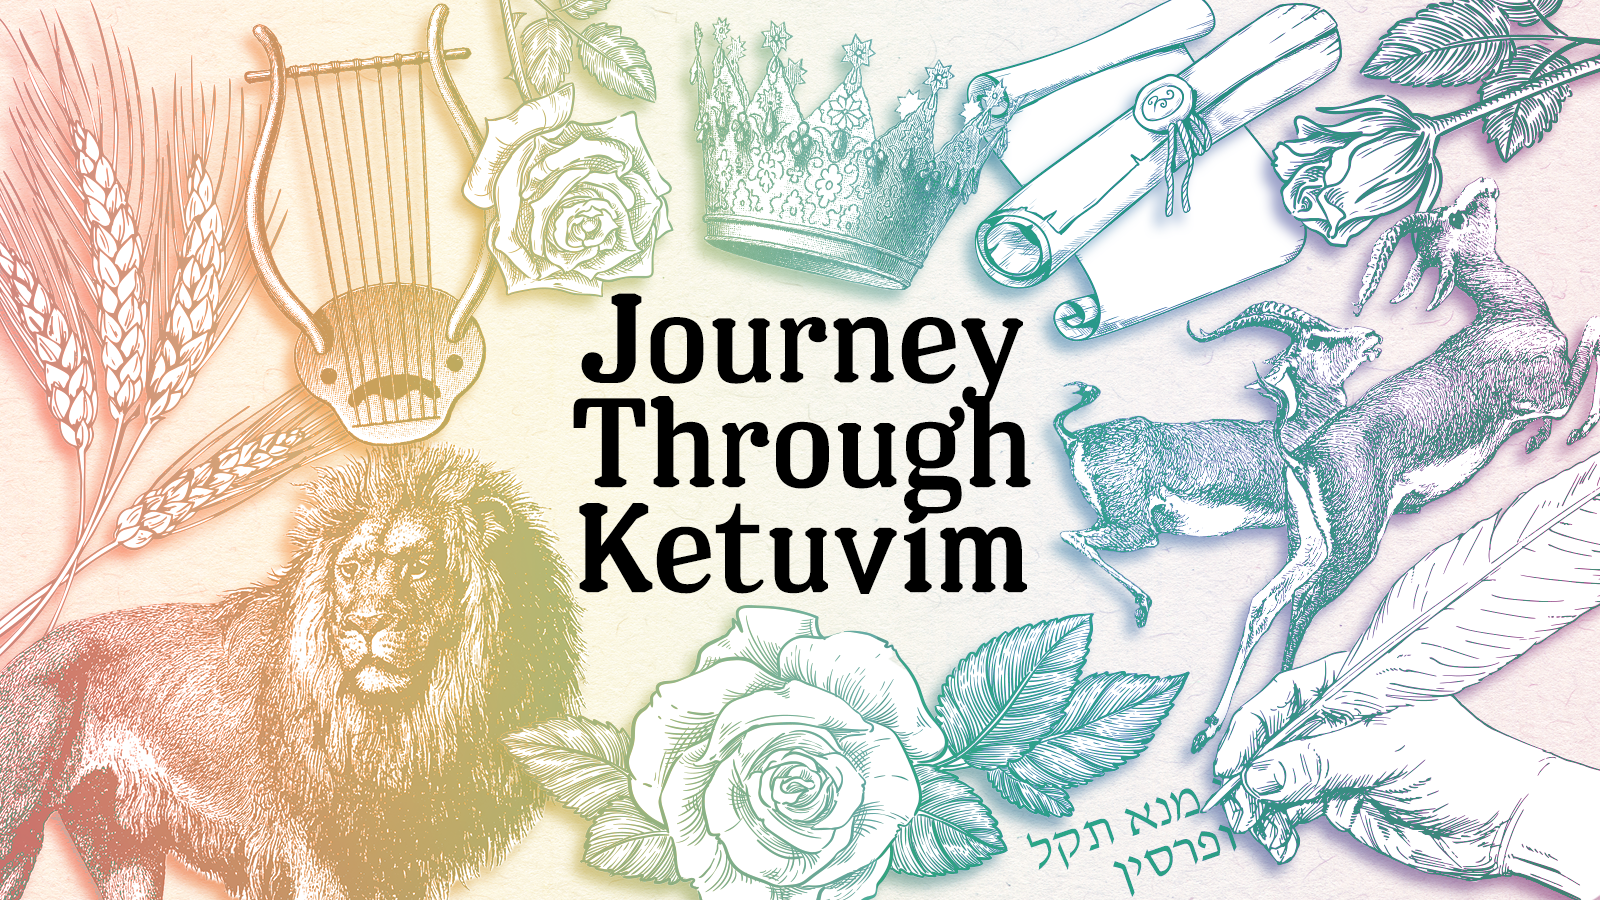 Journey Through Ketuvim